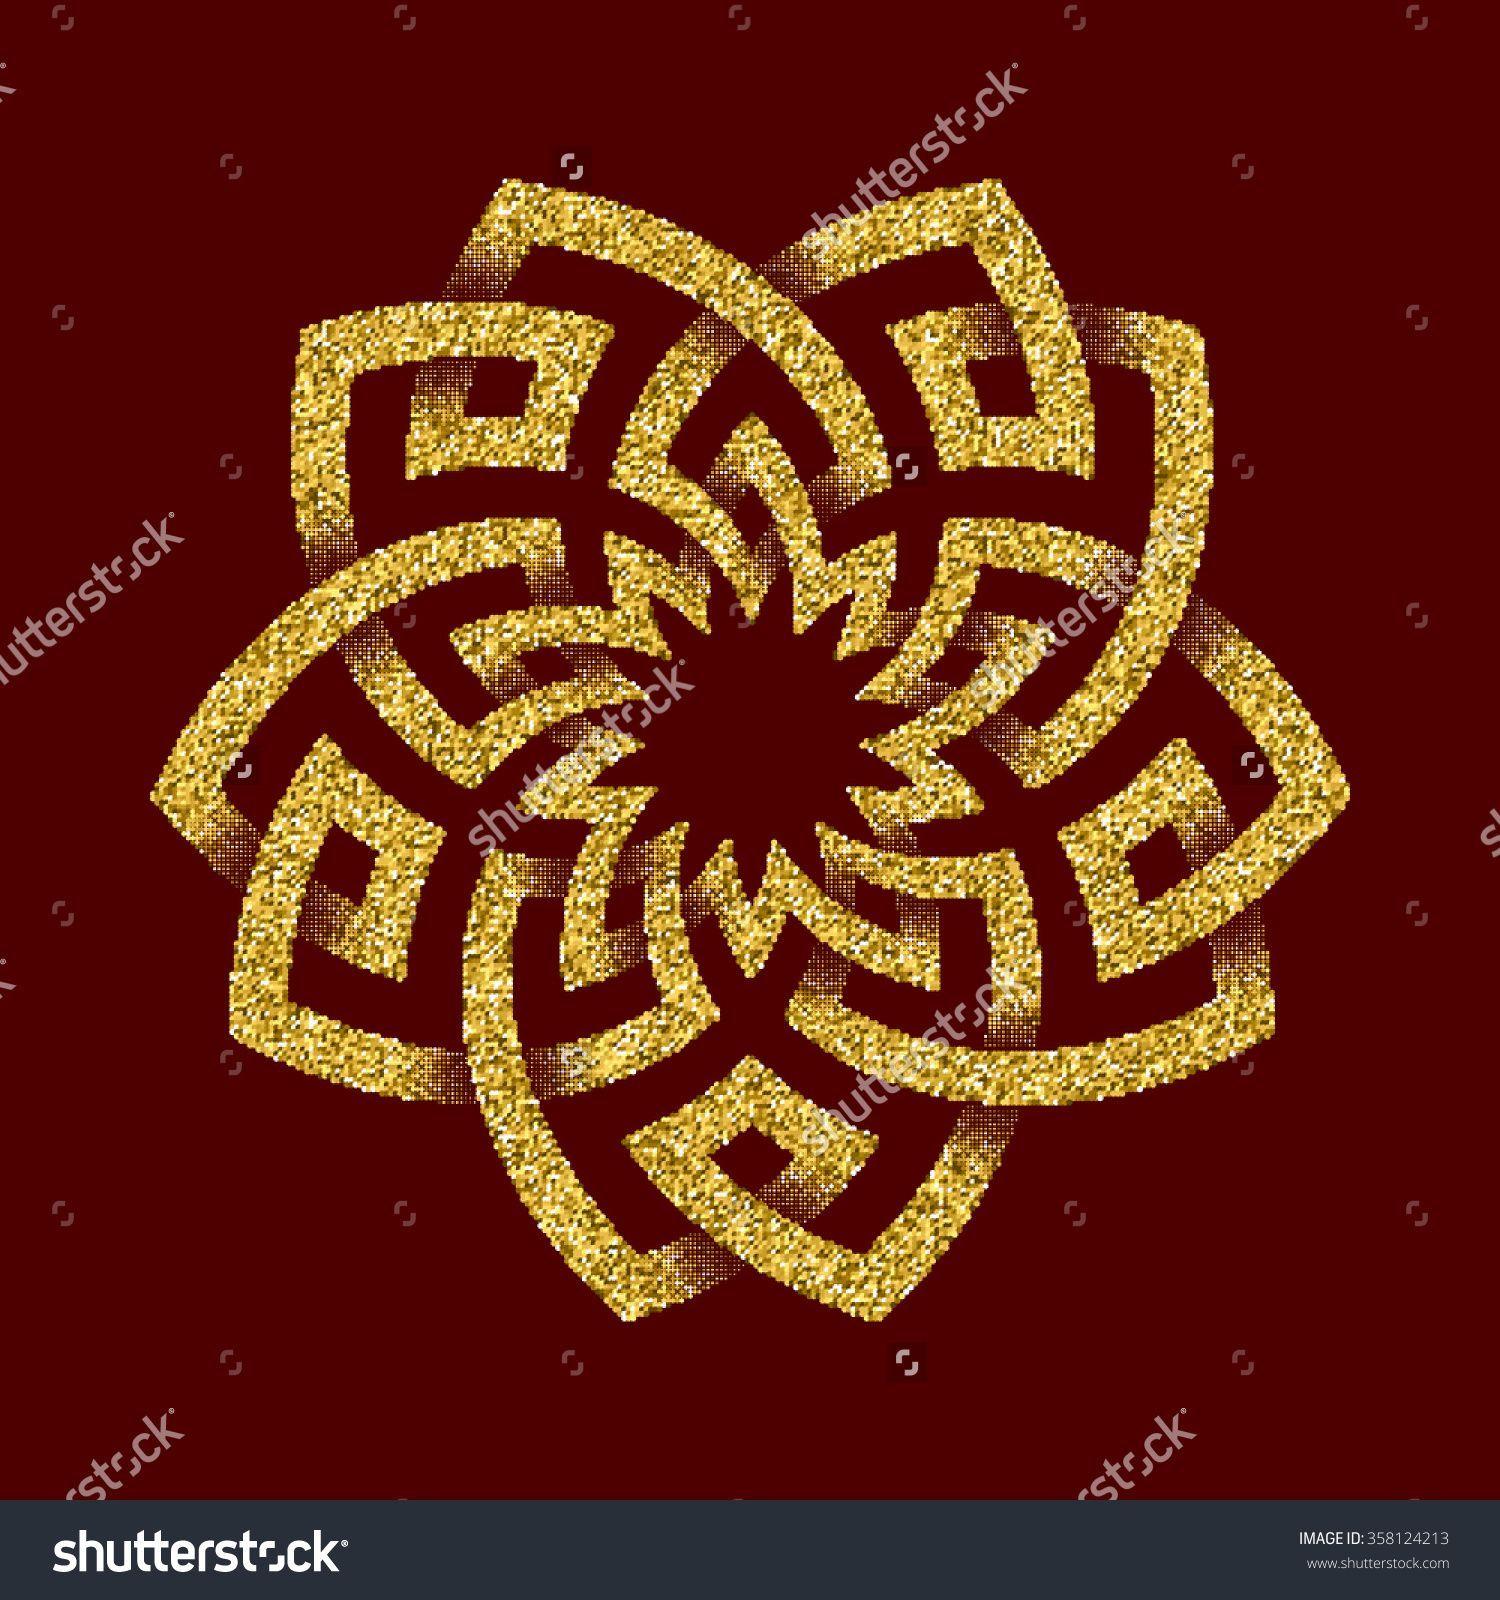 Red Celtic Logo - Golden glittering #logo template in #Celtic knots style on dark red ...